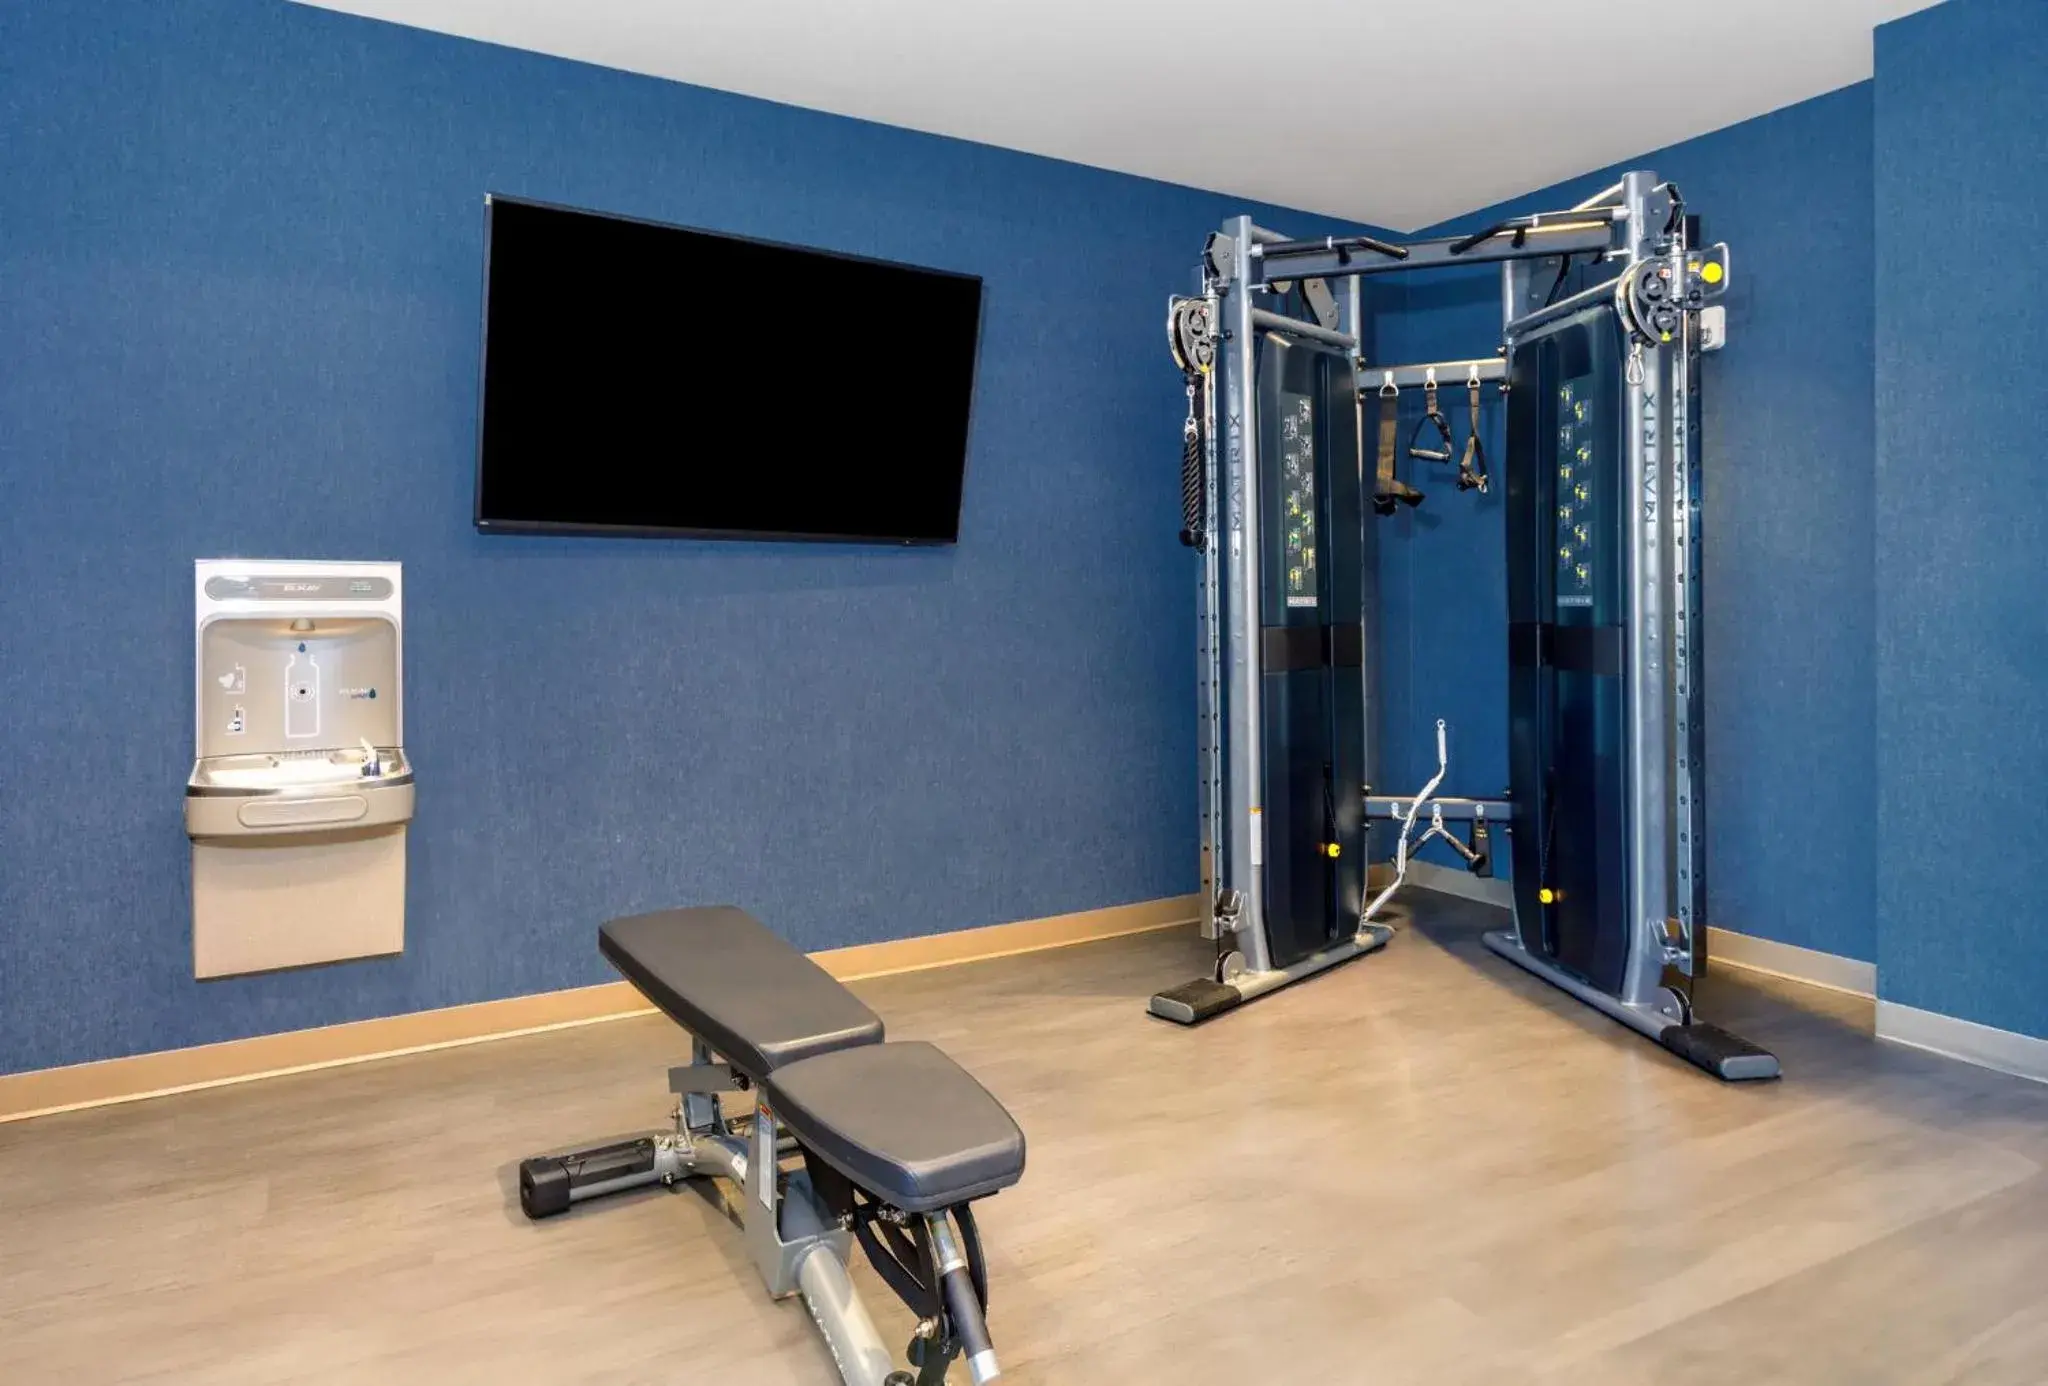 Fitness centre/facilities, Fitness Center/Facilities in Staybridge Suites Winter Haven - Auburndale